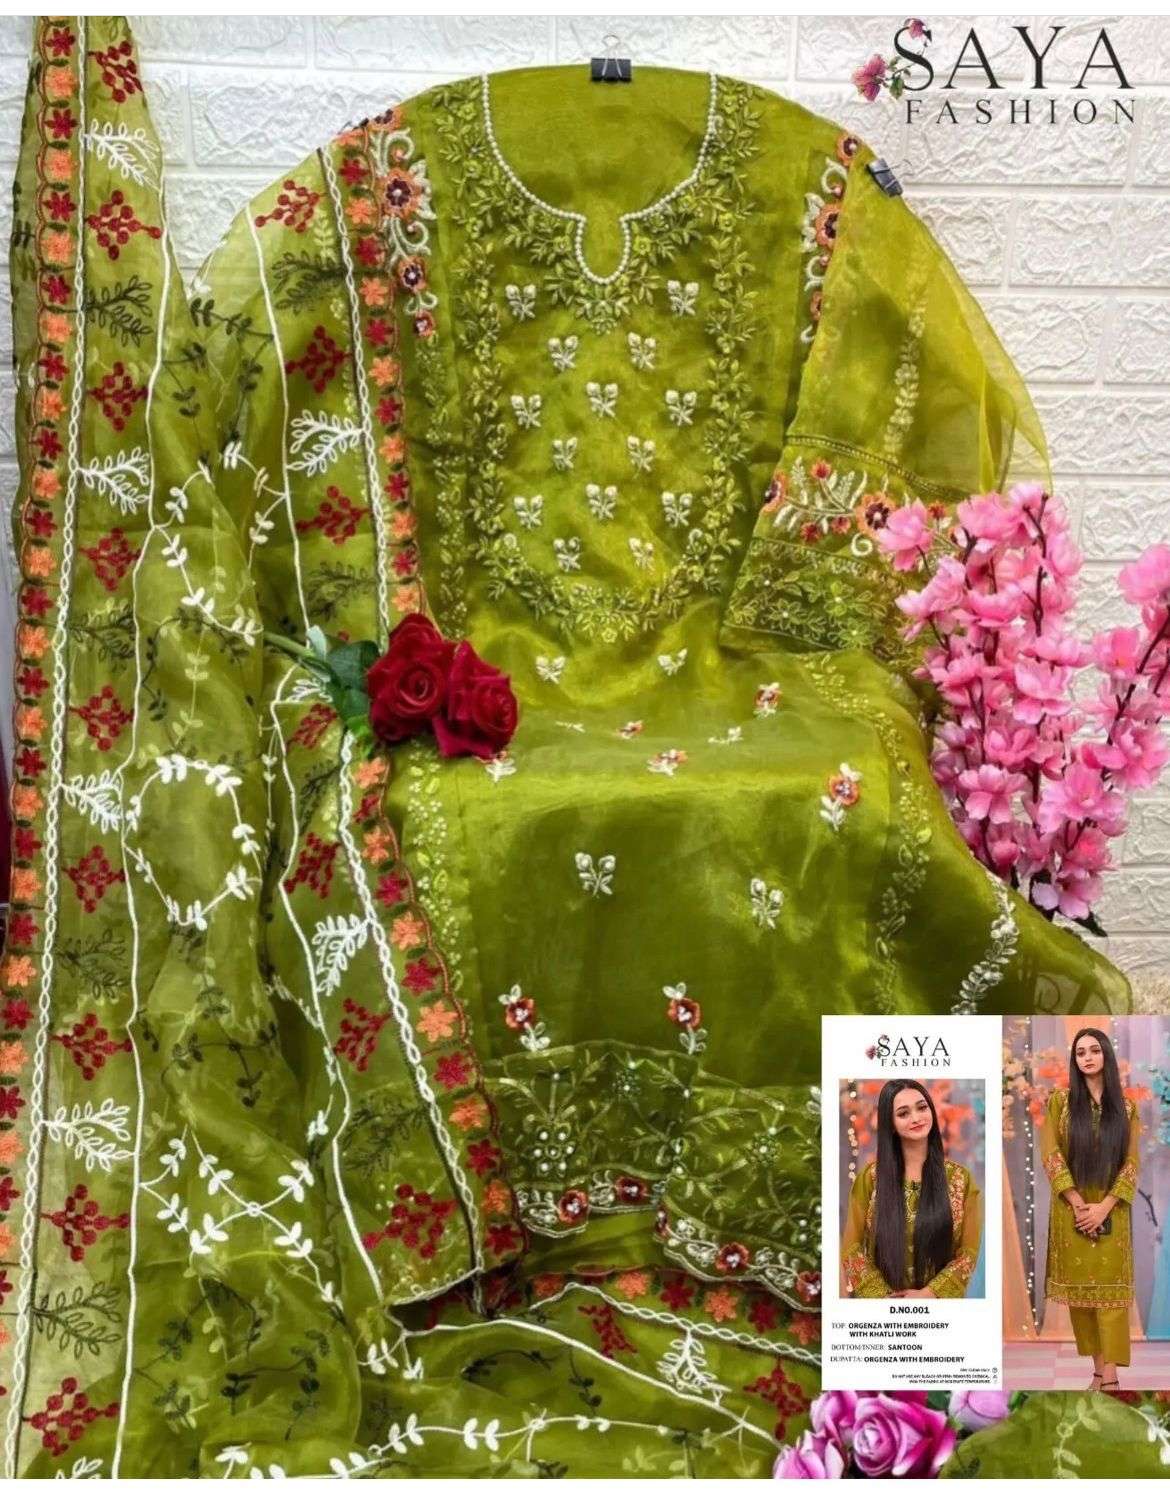 saniya trendz 2015 series trendy designer salwar suits latest collection